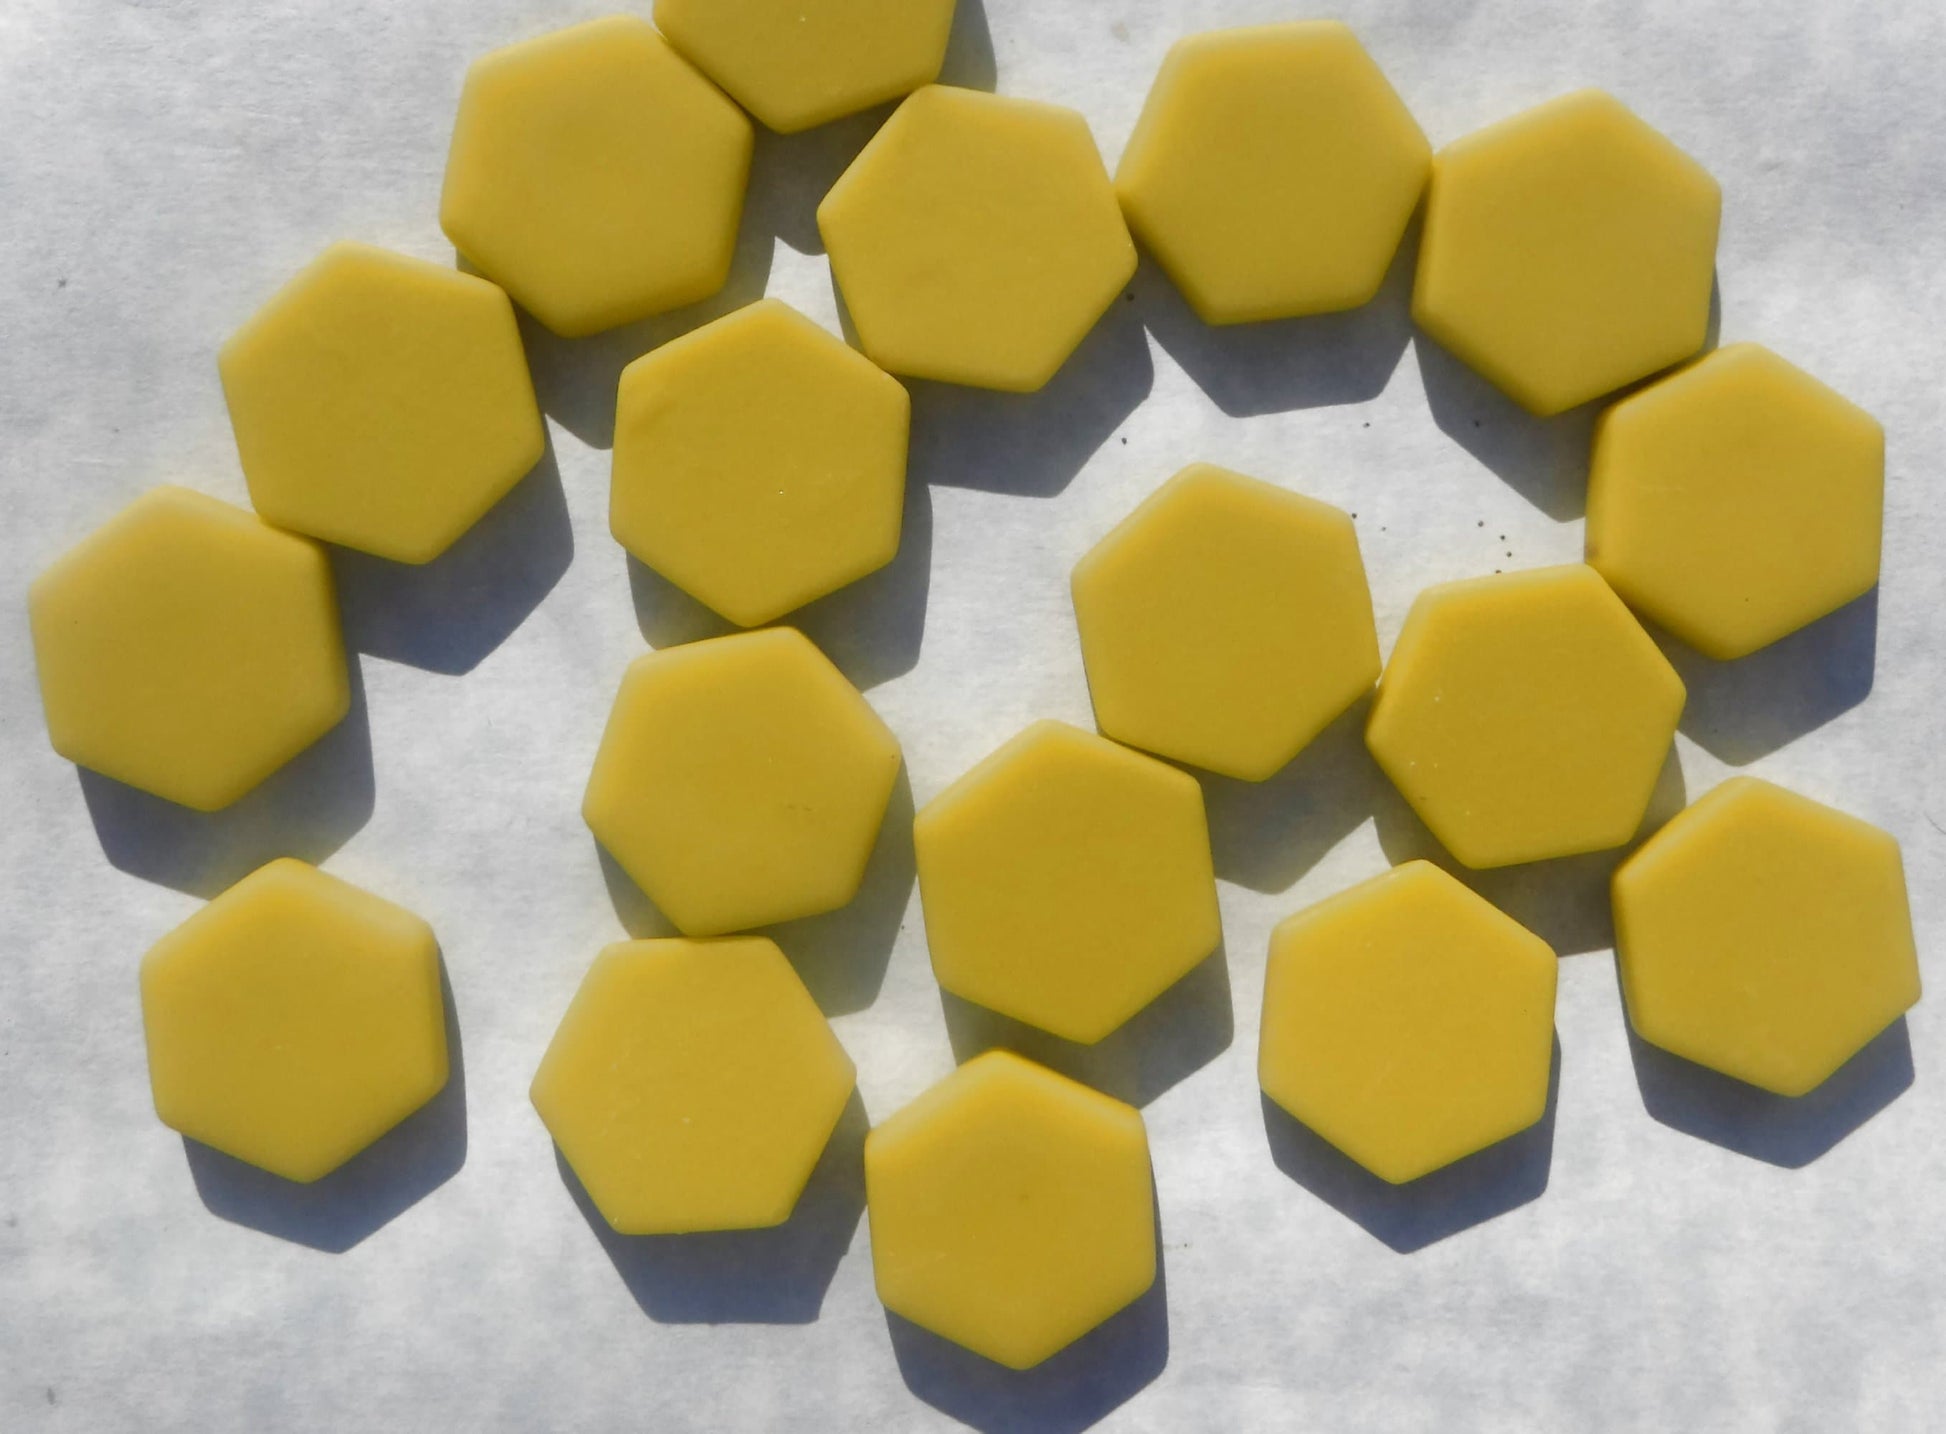 Yellow Hexagon Mosaic Tiles - 25 Glass 23mm MATTE Tiles in Mellow Yellow color